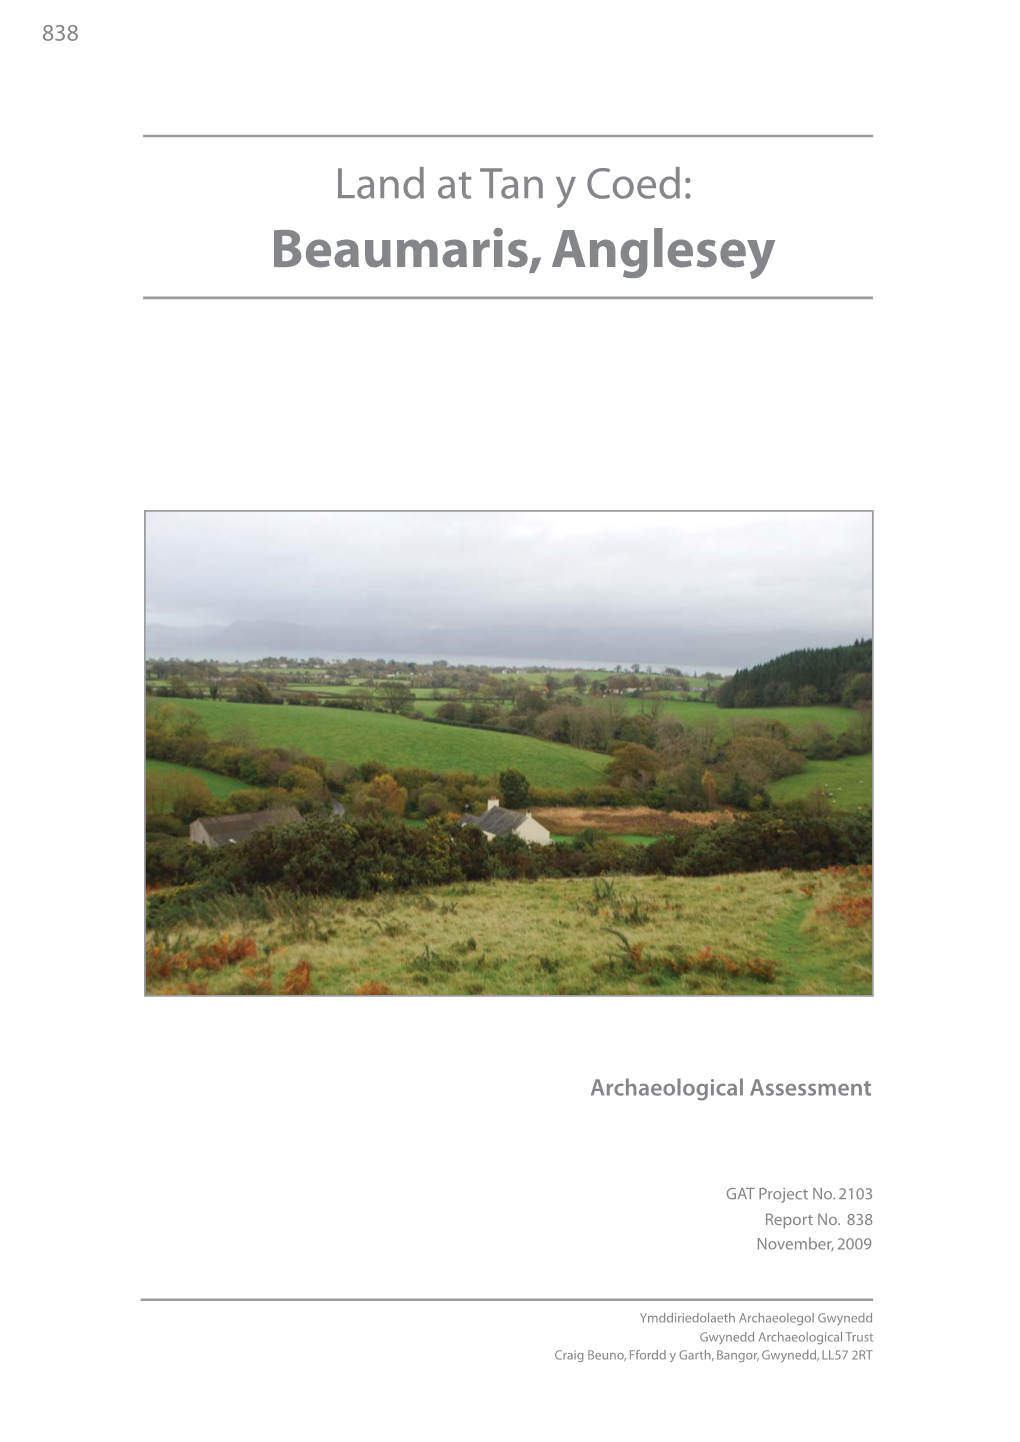 Beaumaris, Anglesey